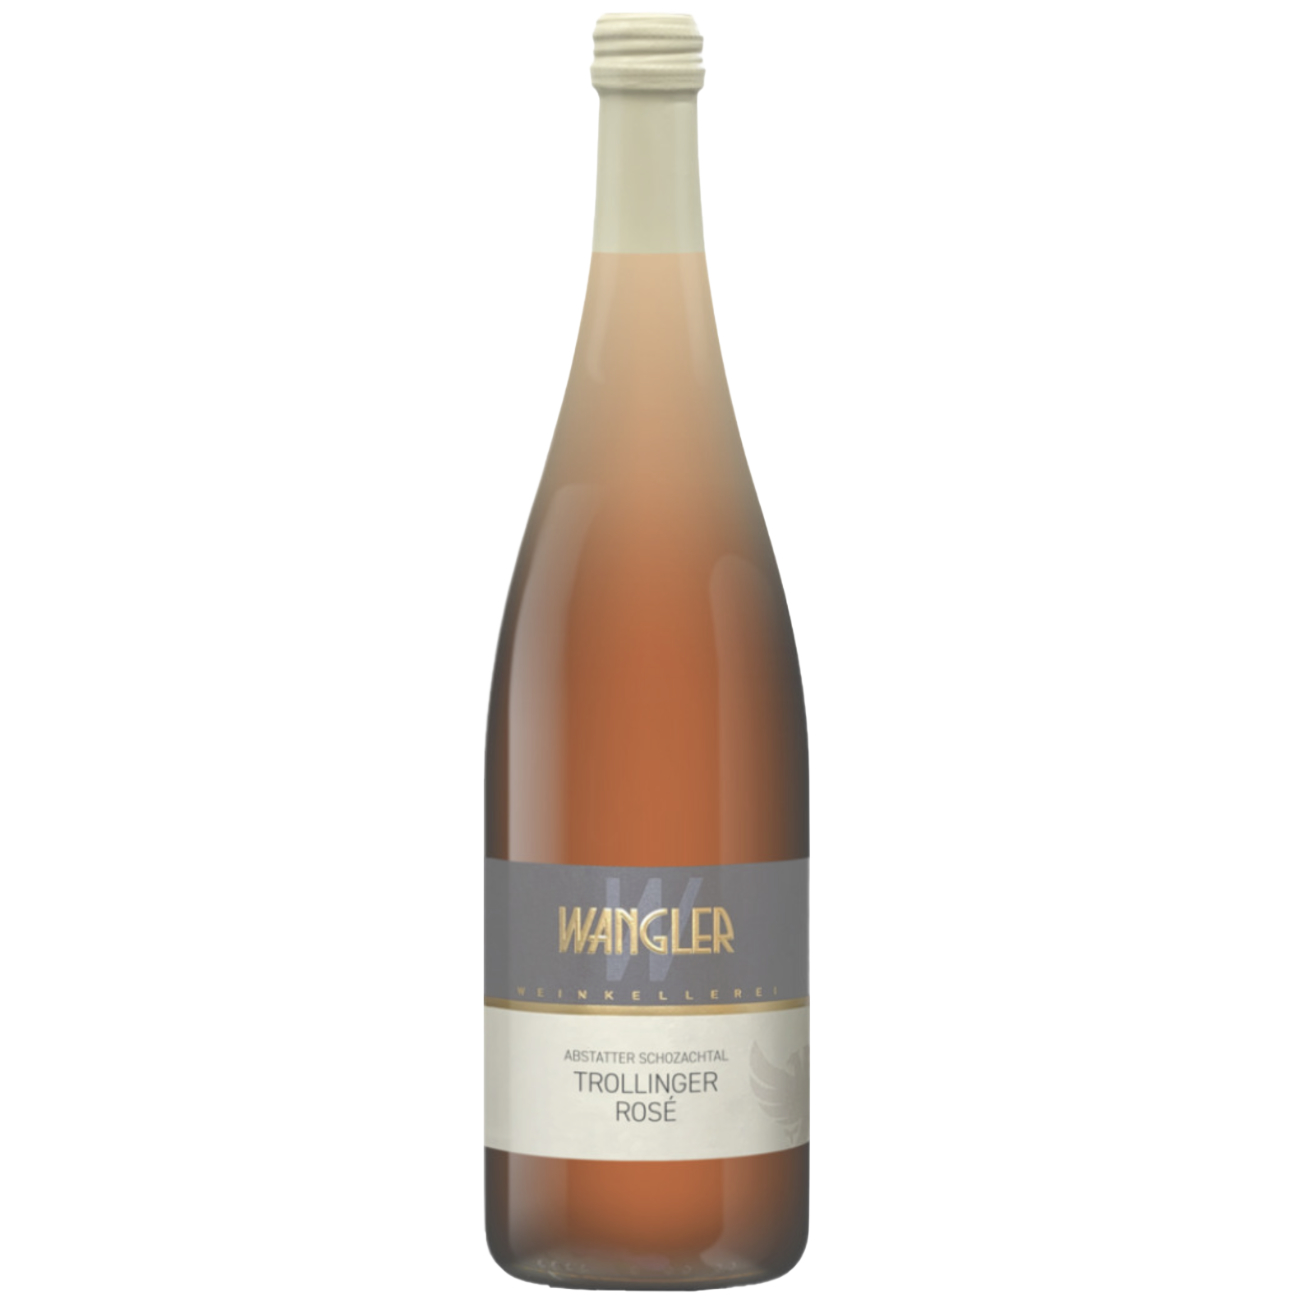 Weinkellerei Wangler Trollinger 2022 Rosé lieblich Abstatter Schozachtal 1,0 L - Literflasche, Qualitätswein, Württemberg